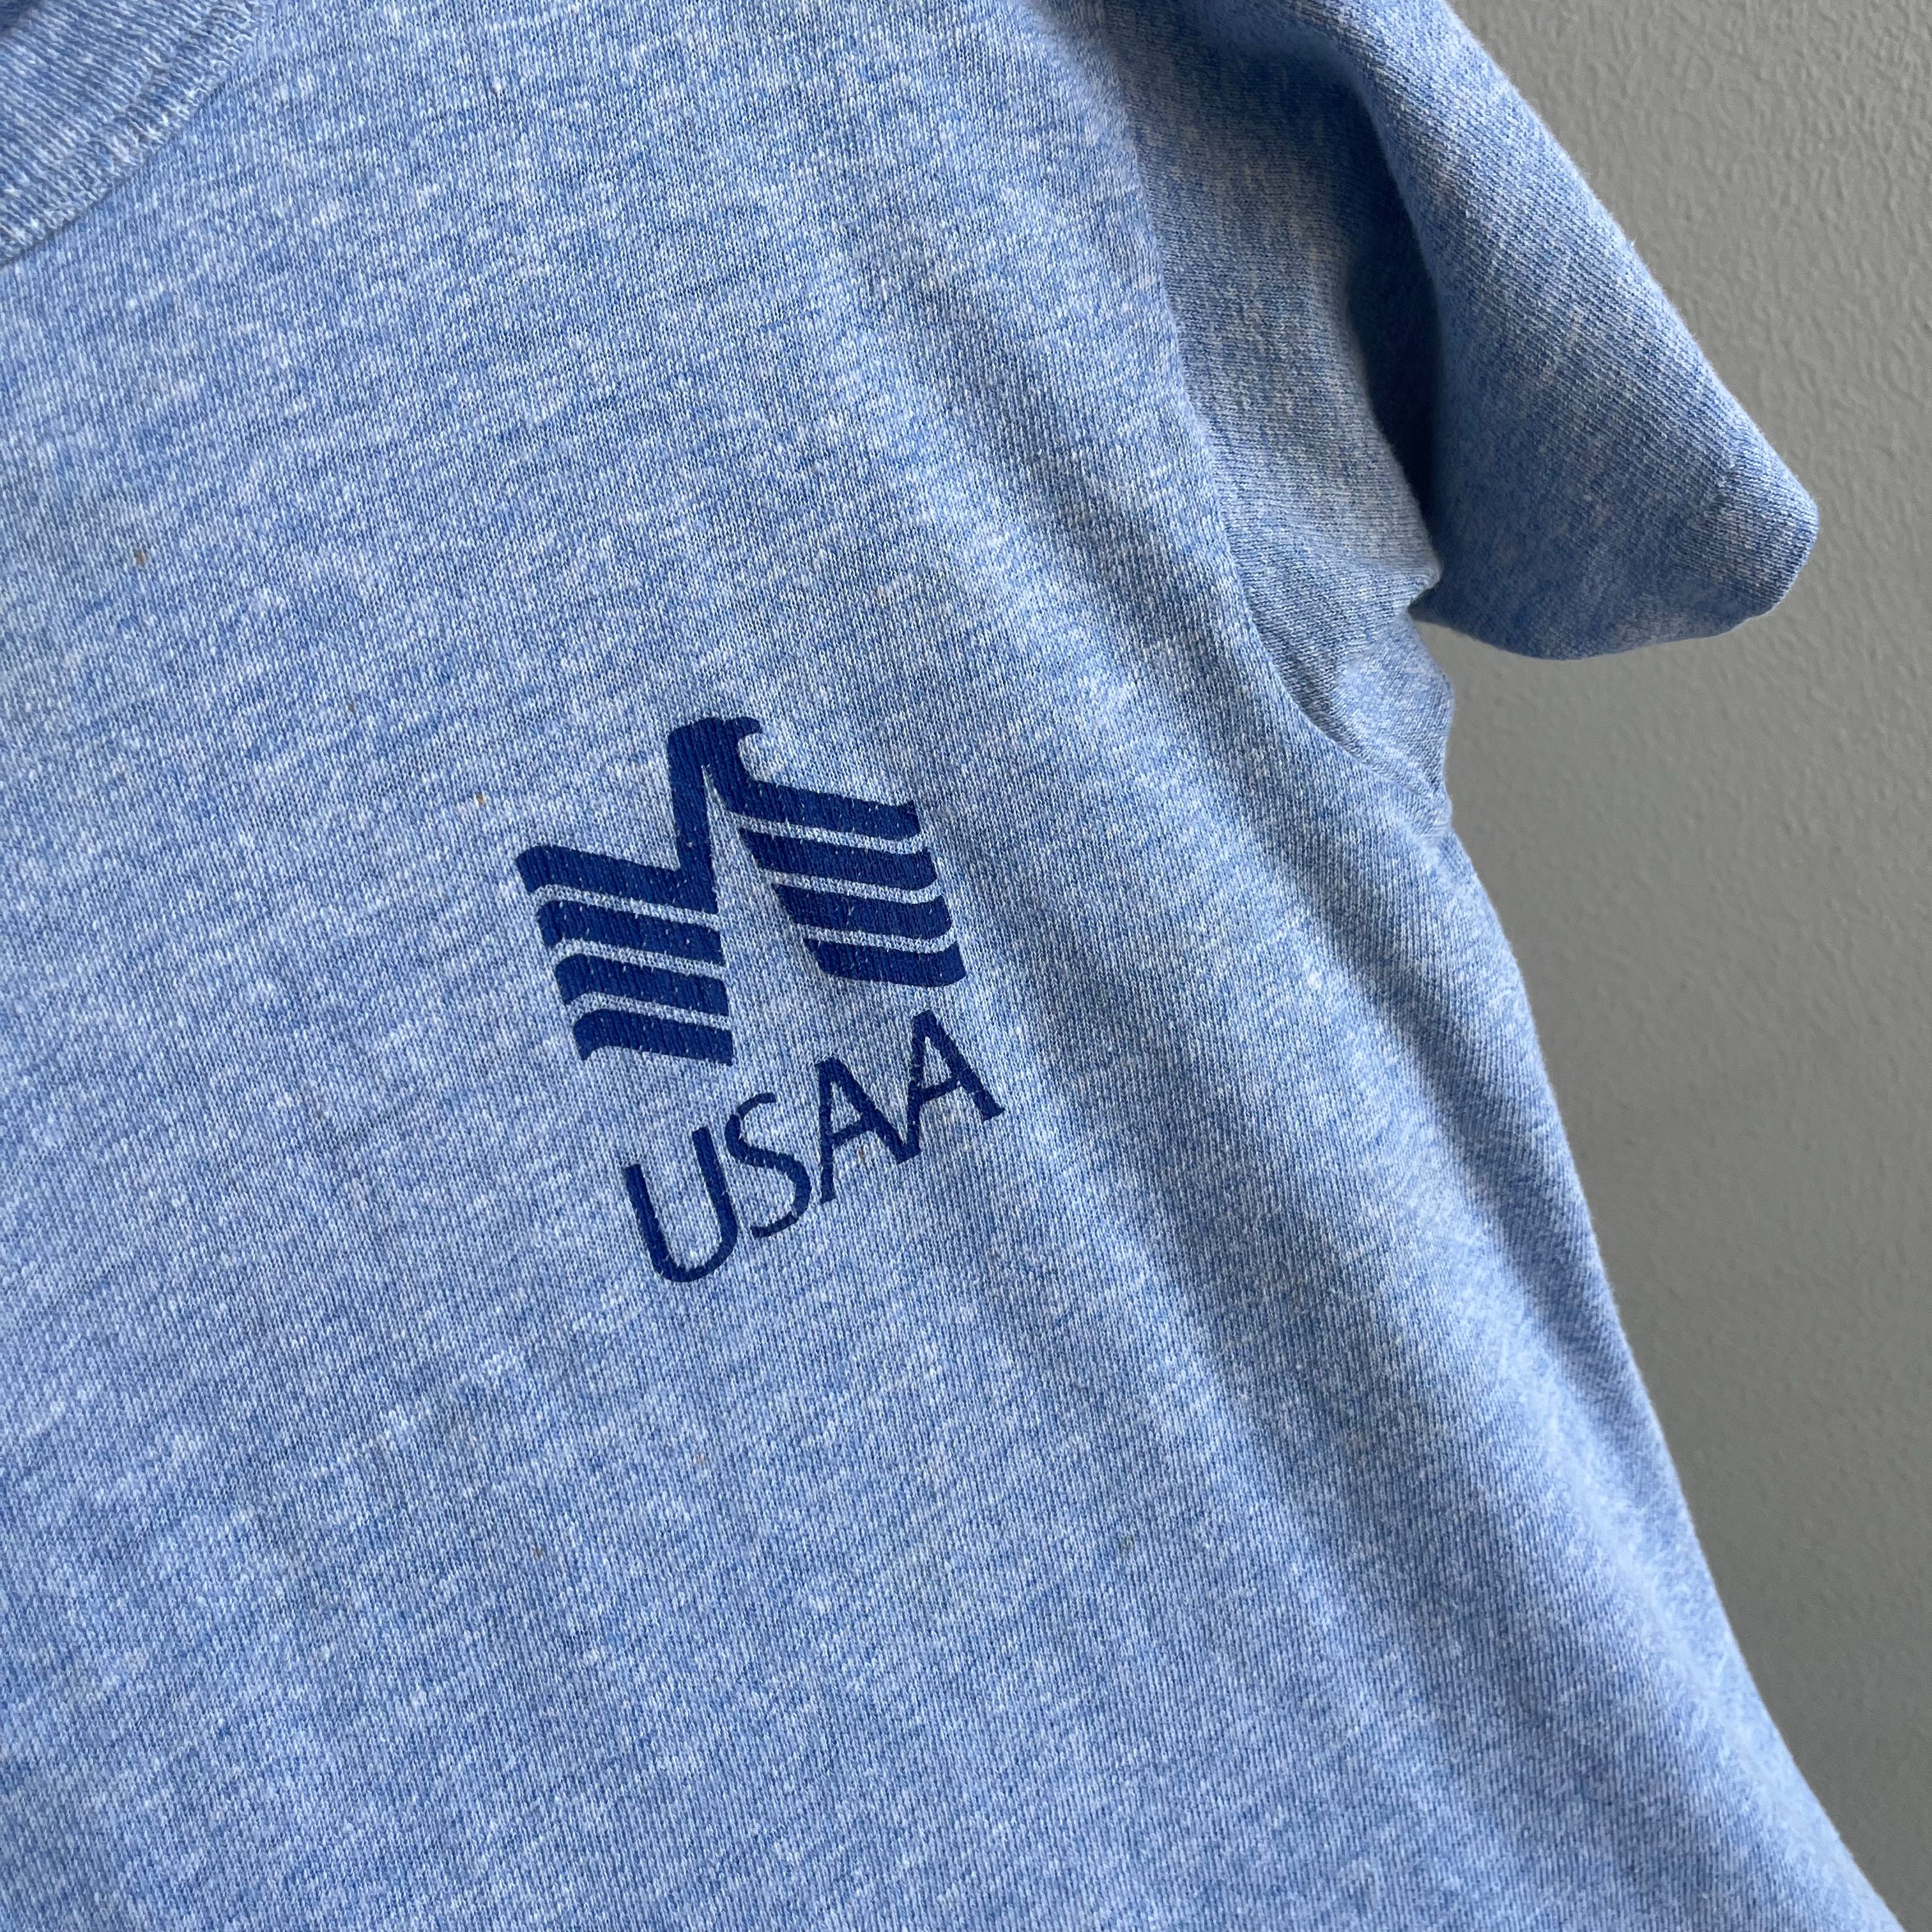 1980s USAA Champion Brand T-Shirt